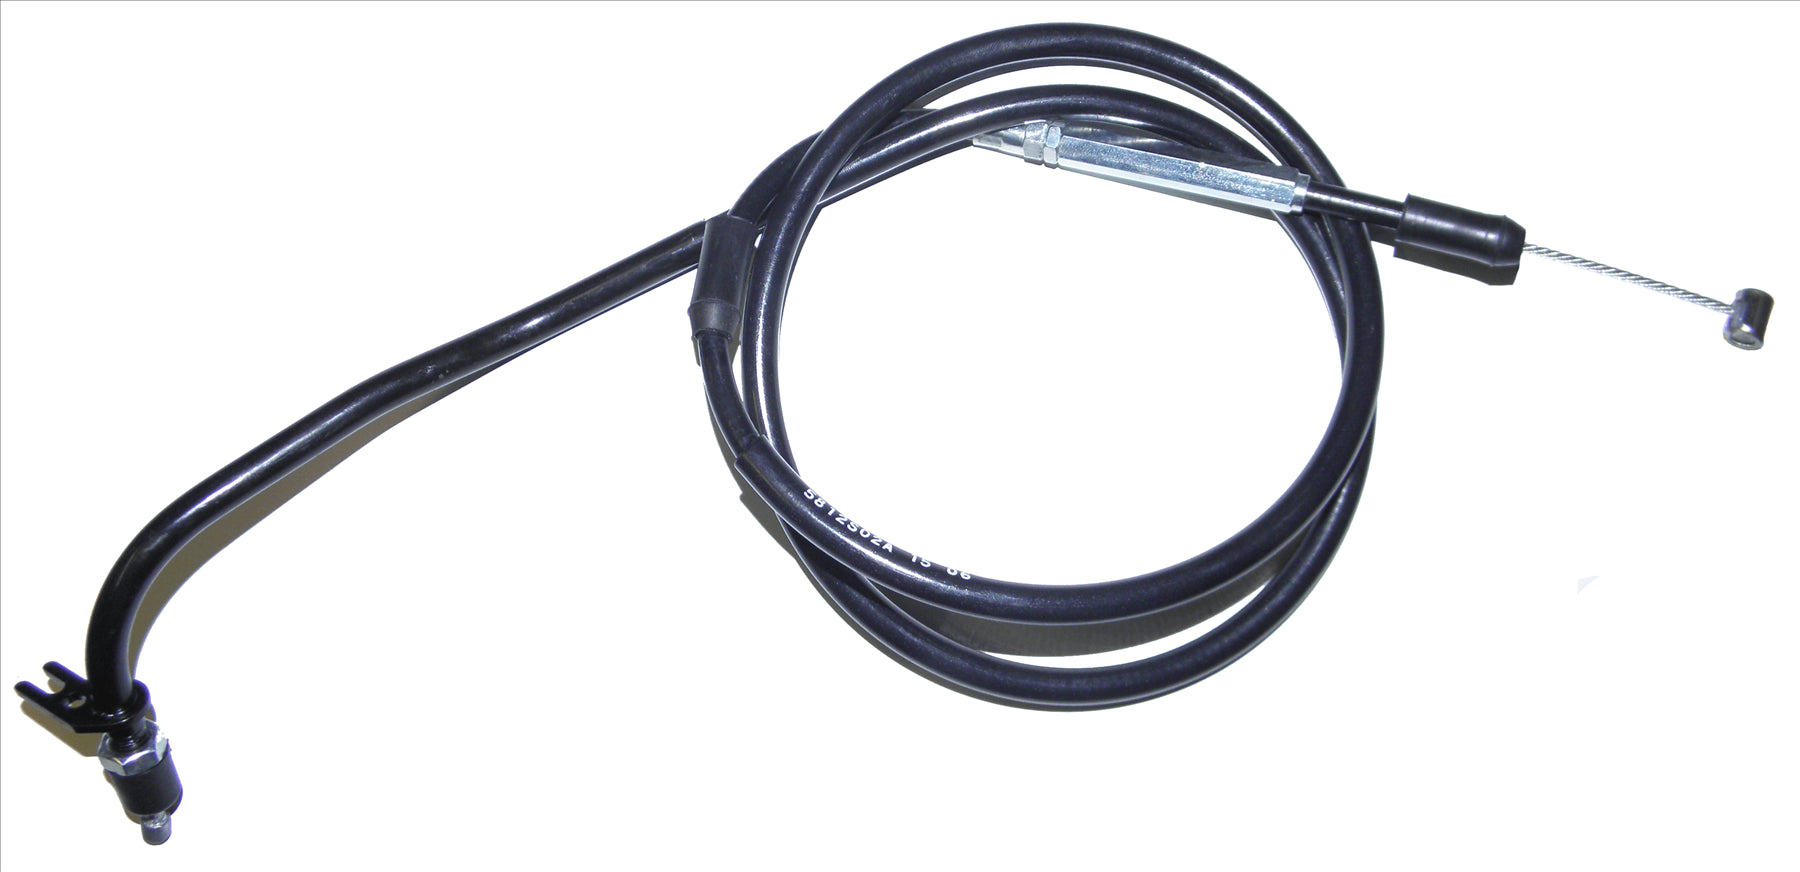 Apico Black Clutch Cable For Honda CRF 450R 2009-2012